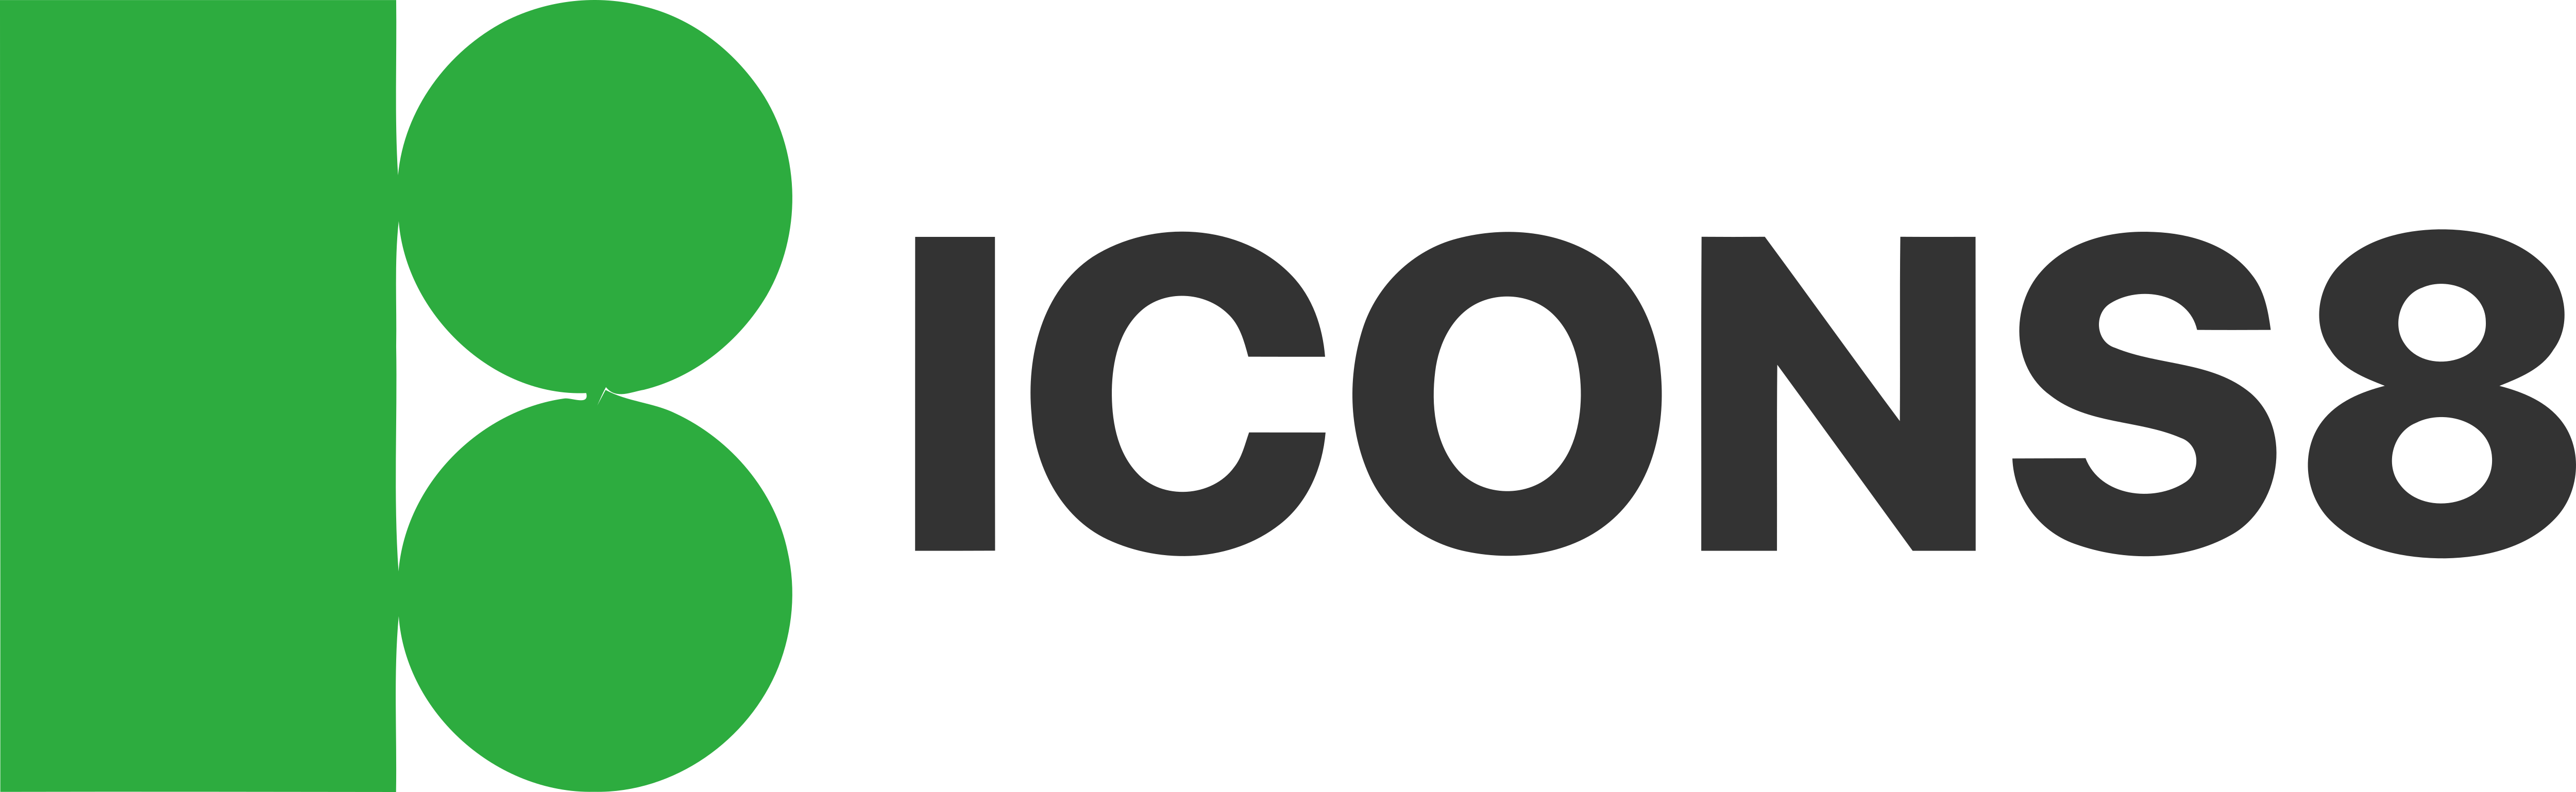 Icons8 לוגו